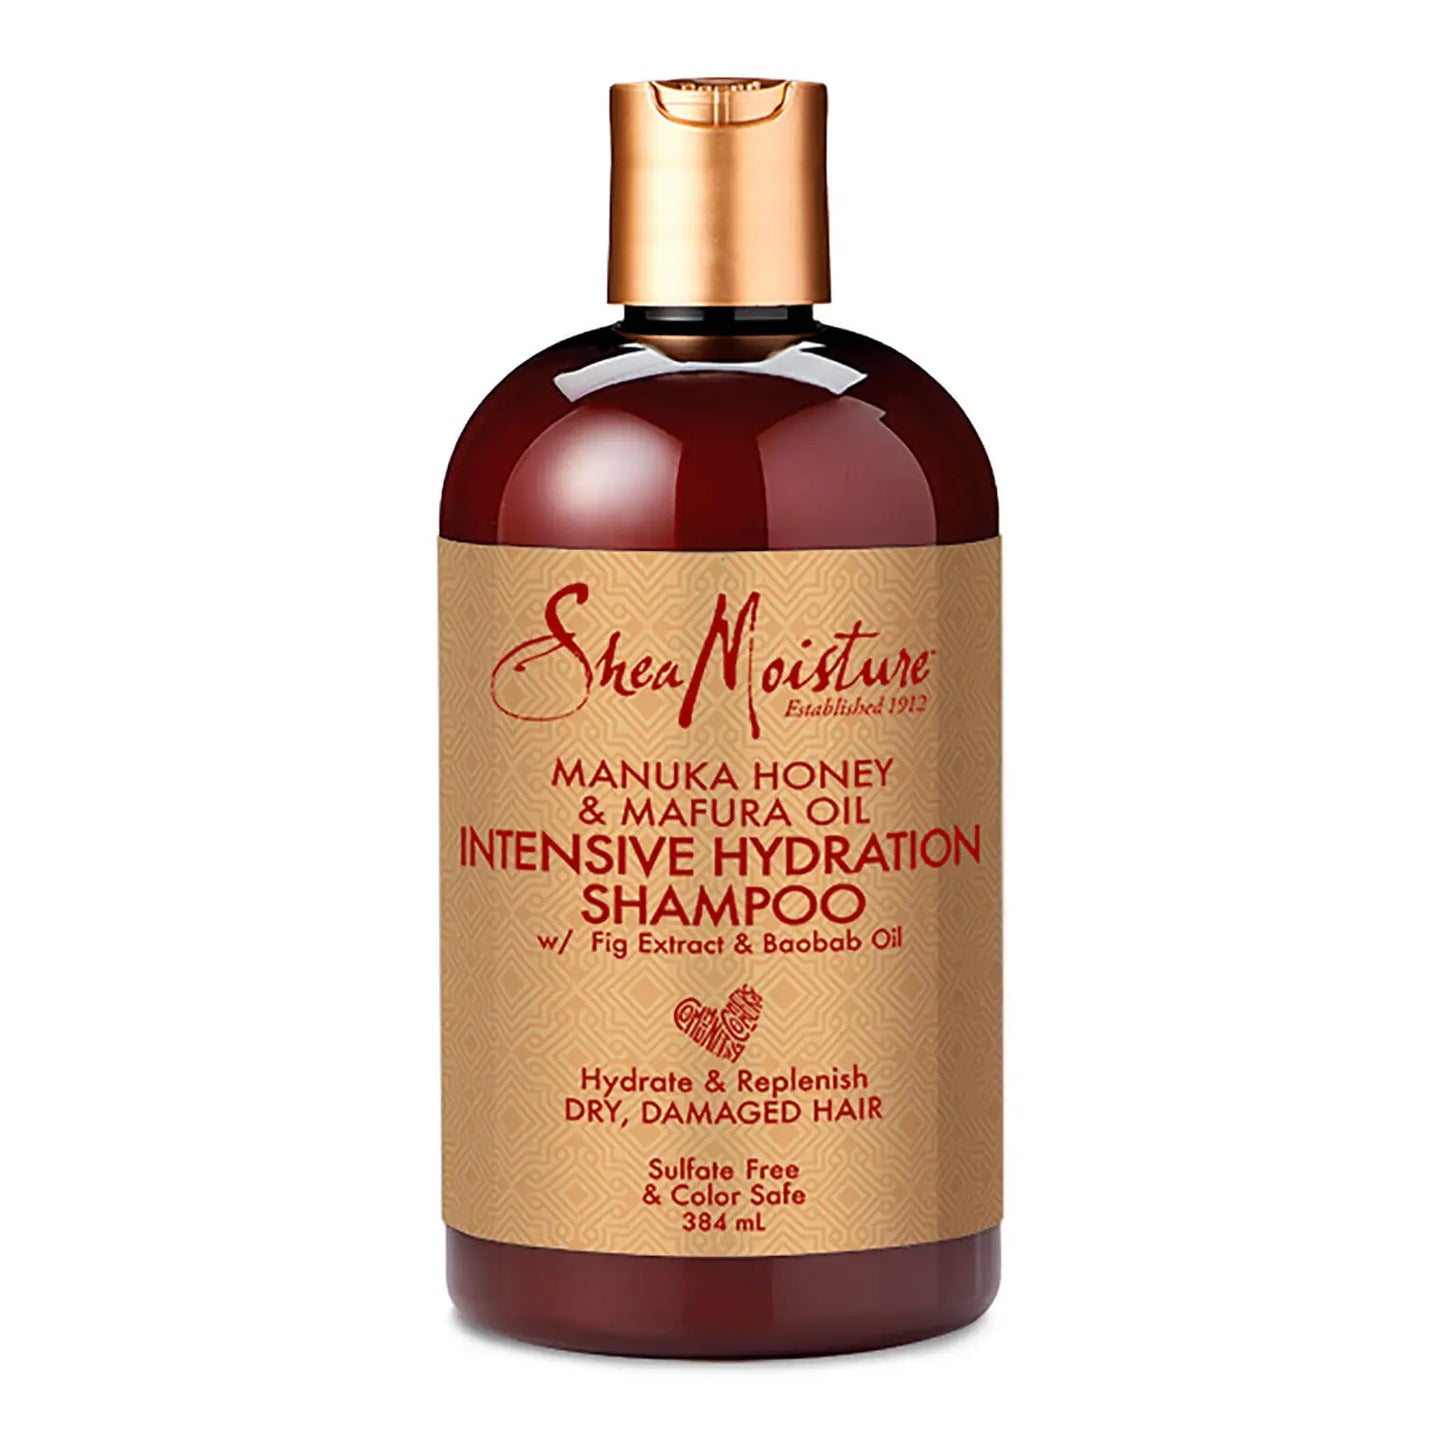 SHEA MOISTURE | Manuka Honey & Mafura Oil Intensive Hydration Shampoo